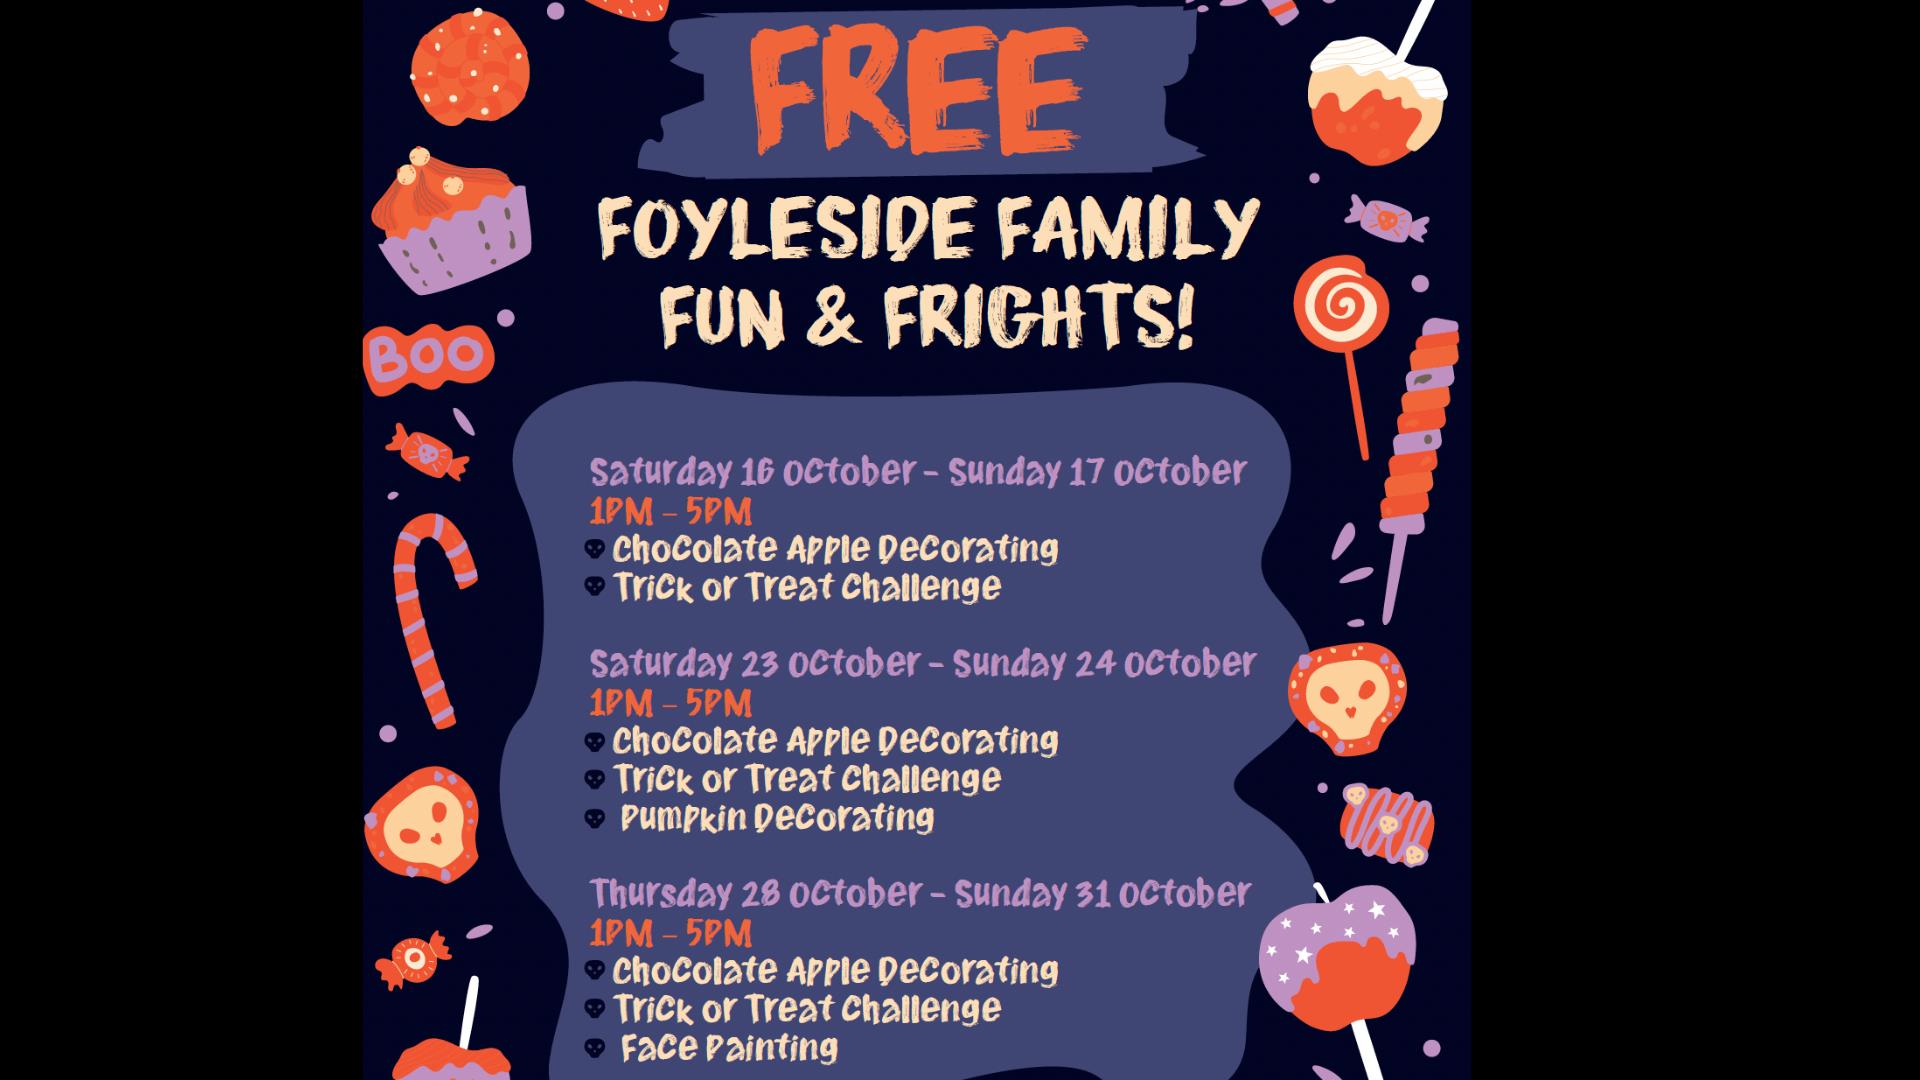 Derry Halloween - Foyleside Family Fun & Frights